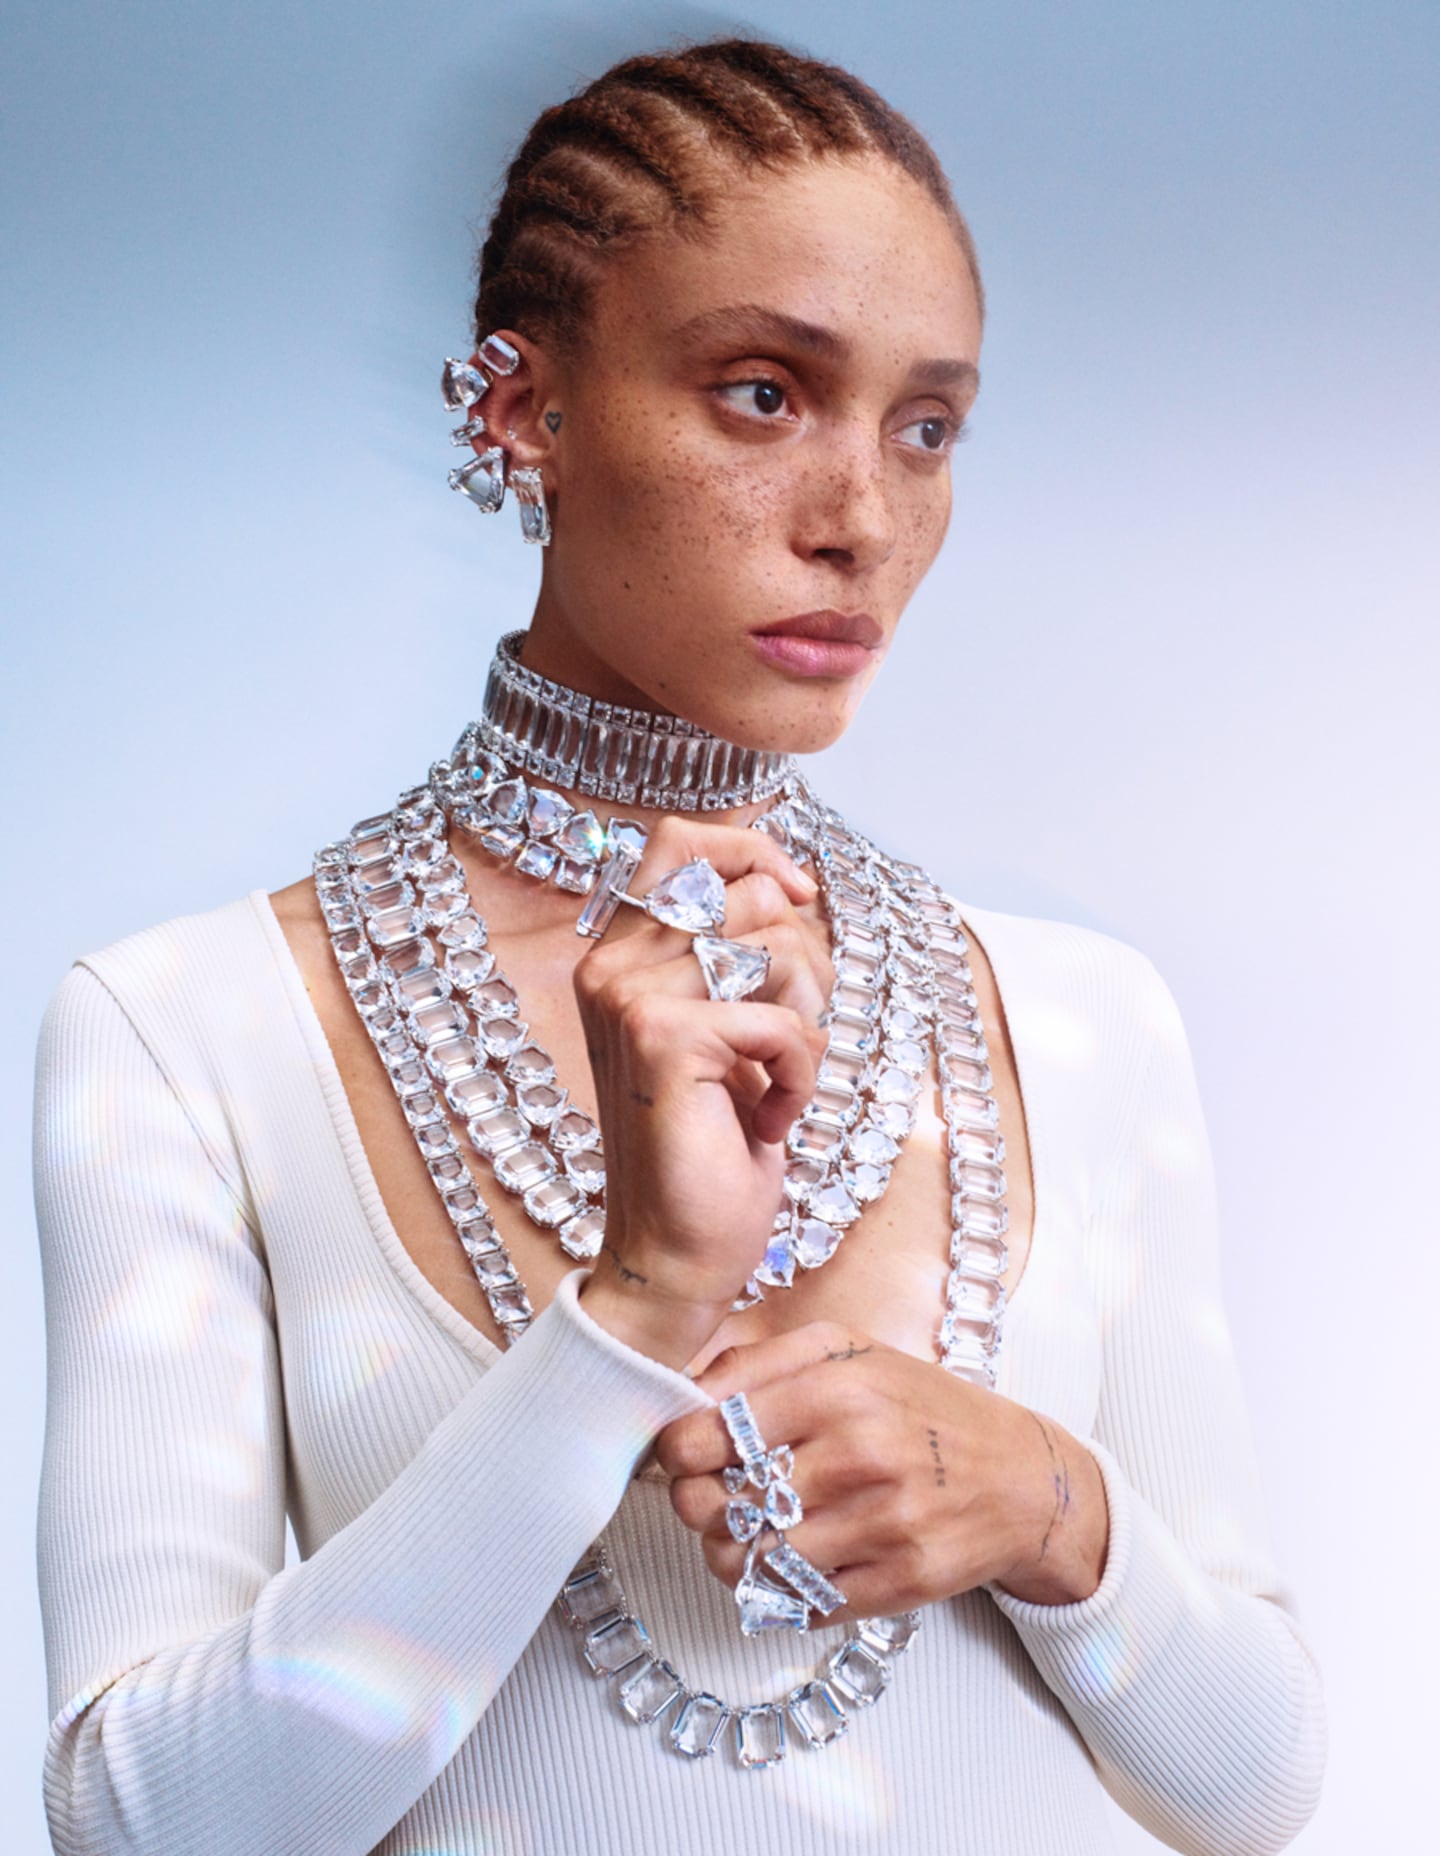 Adwoah Aboah models crystal jewellery designed by Giovanna Battaglia Engelbert for Swarovski.